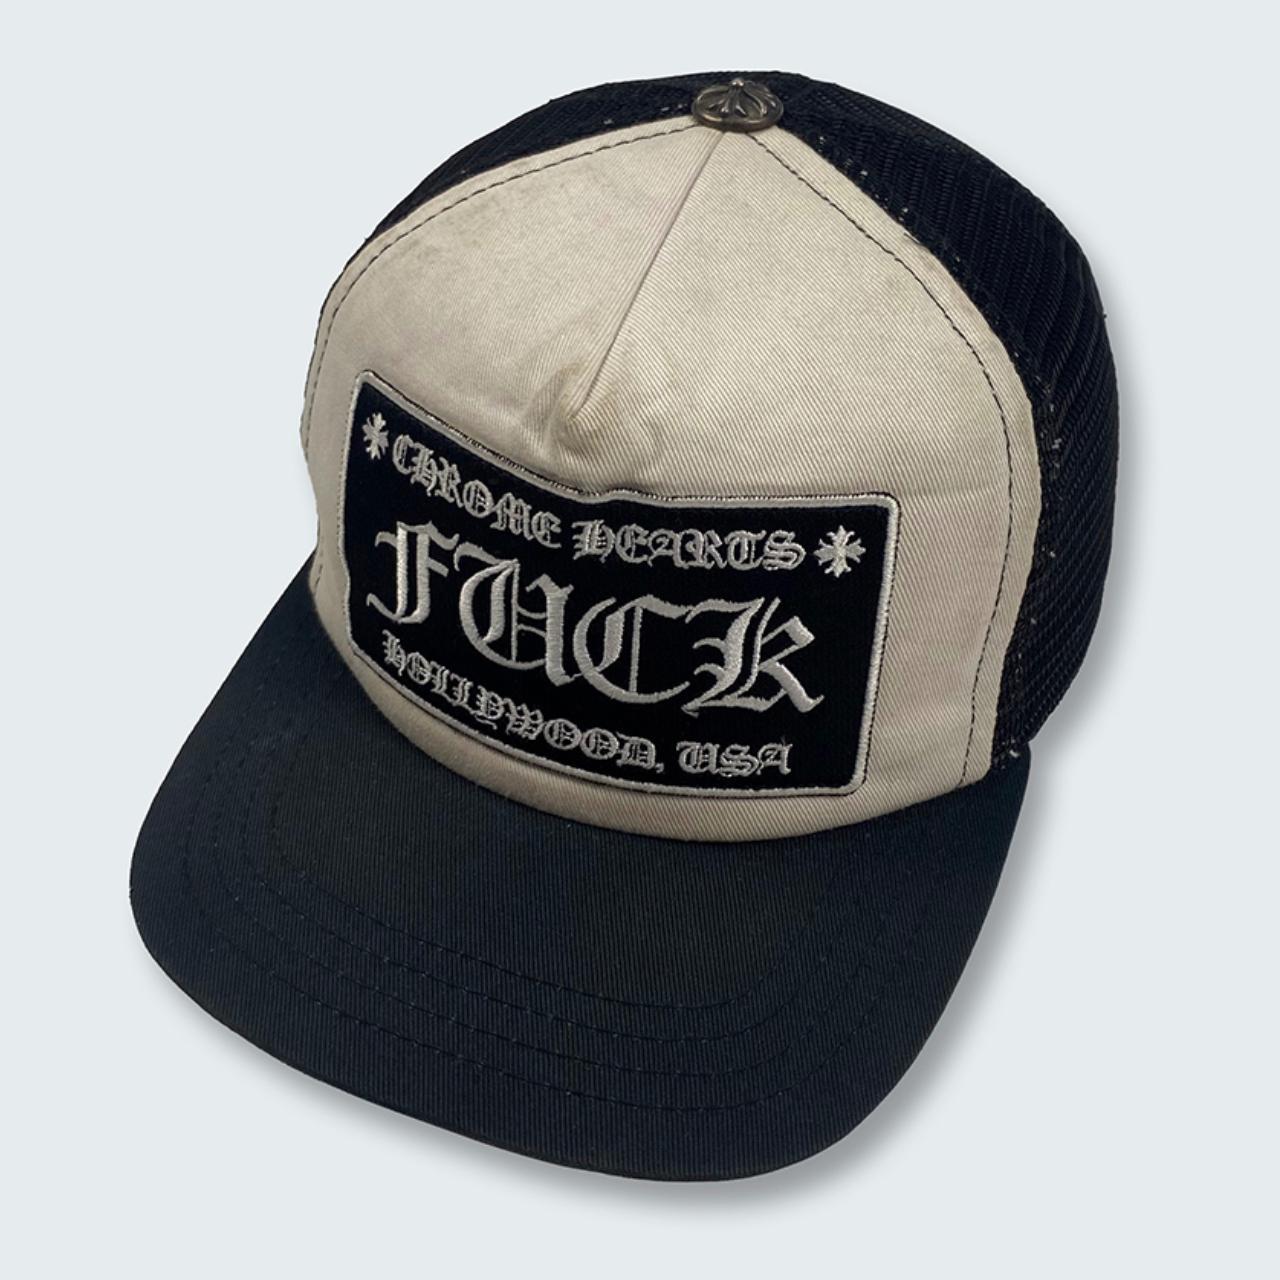 Authentic Vintage Chrome Hearts Trucker Hat